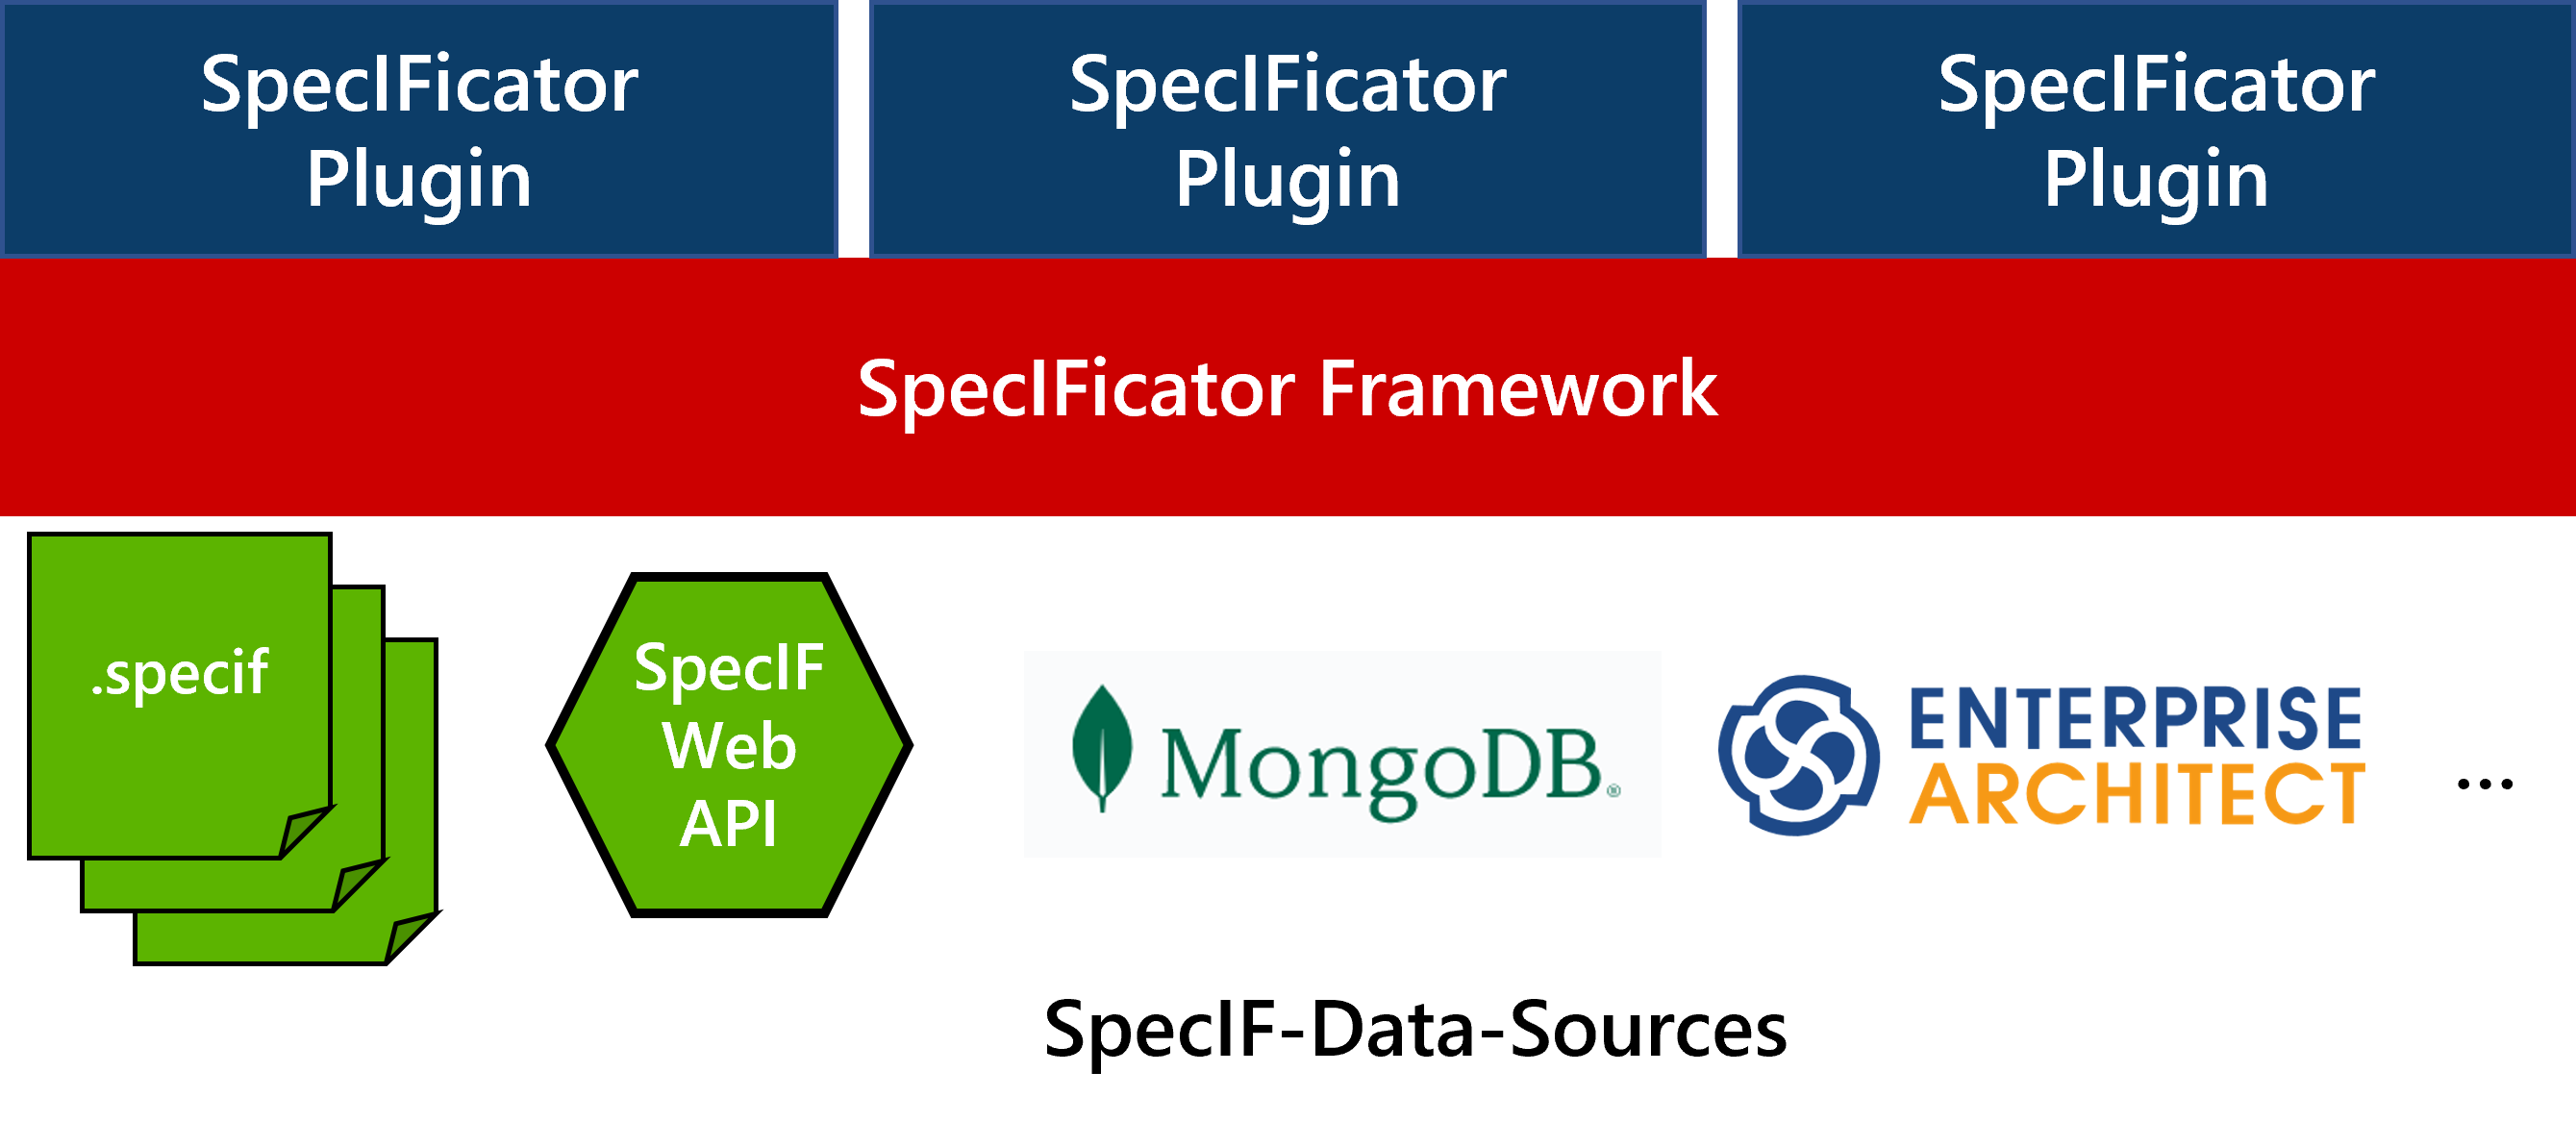 SpecIFicator Framework architecture